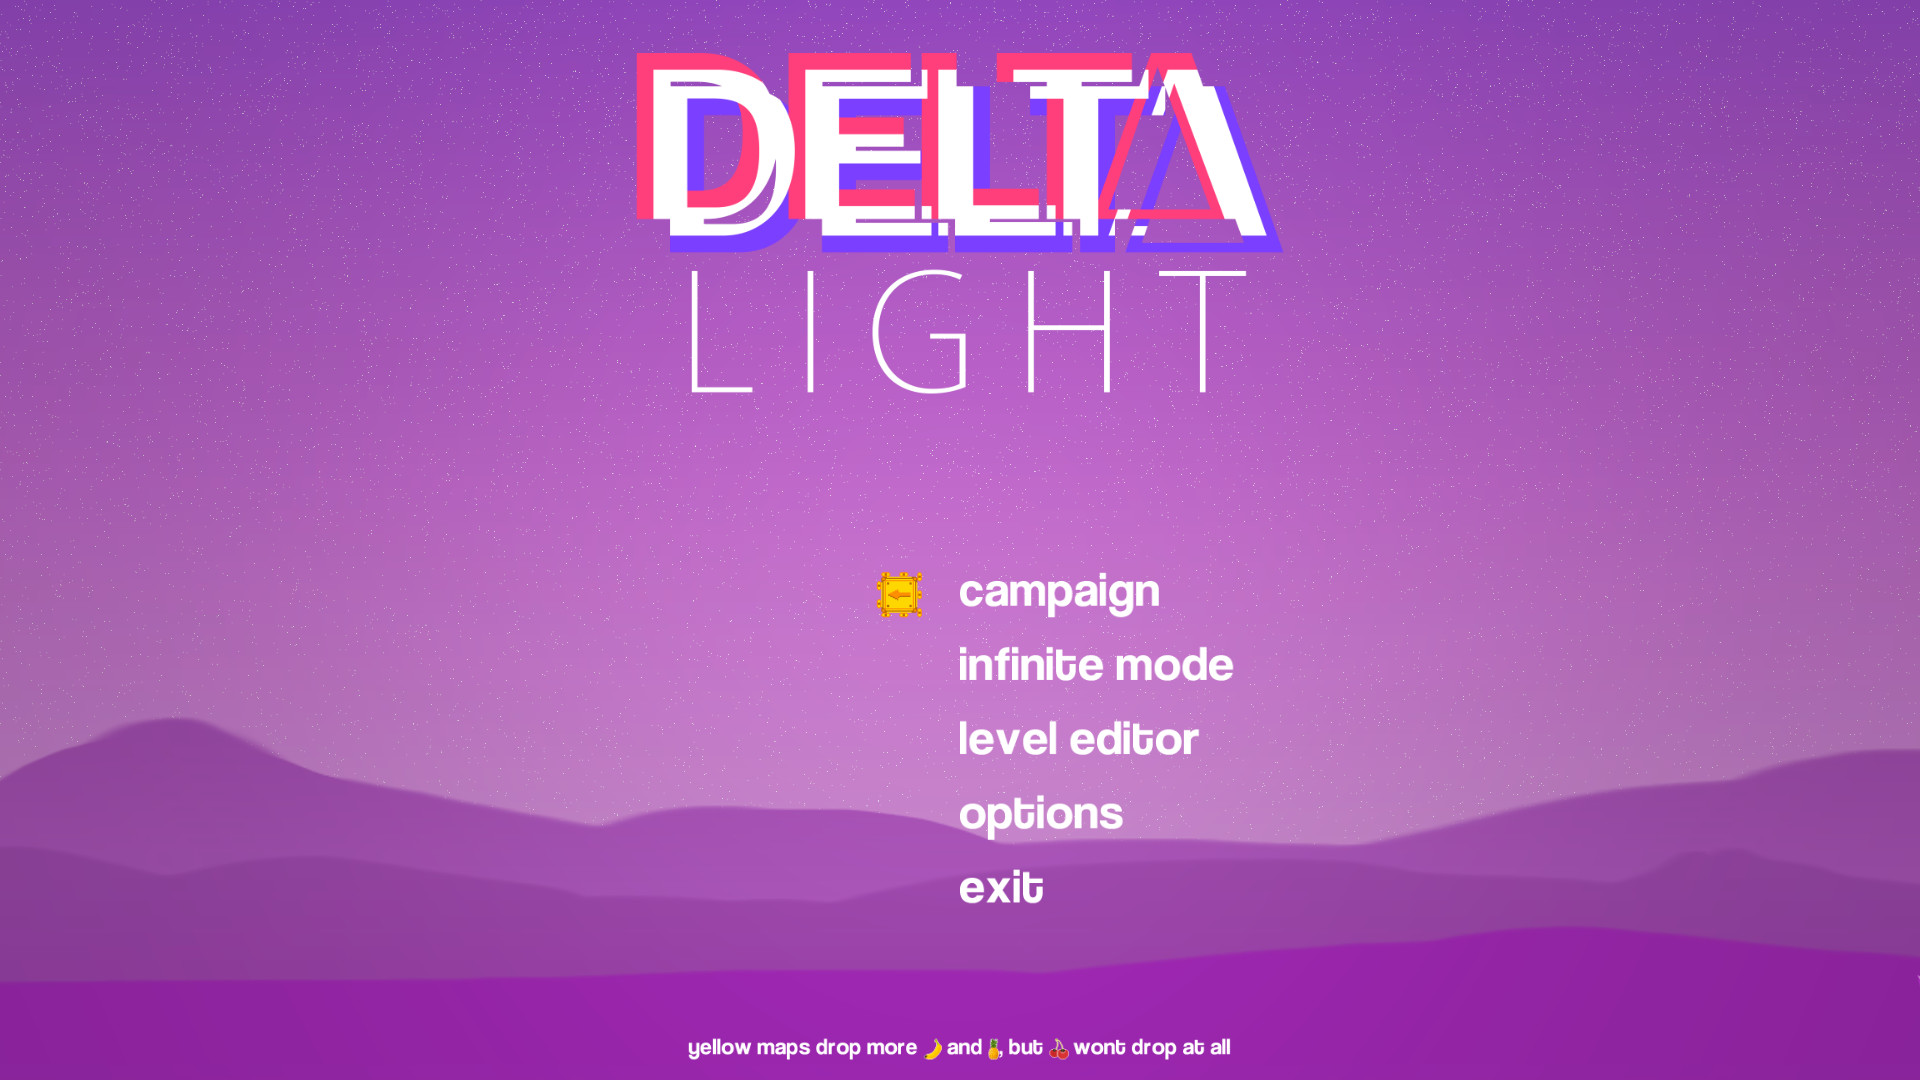 Delta Light Free Download